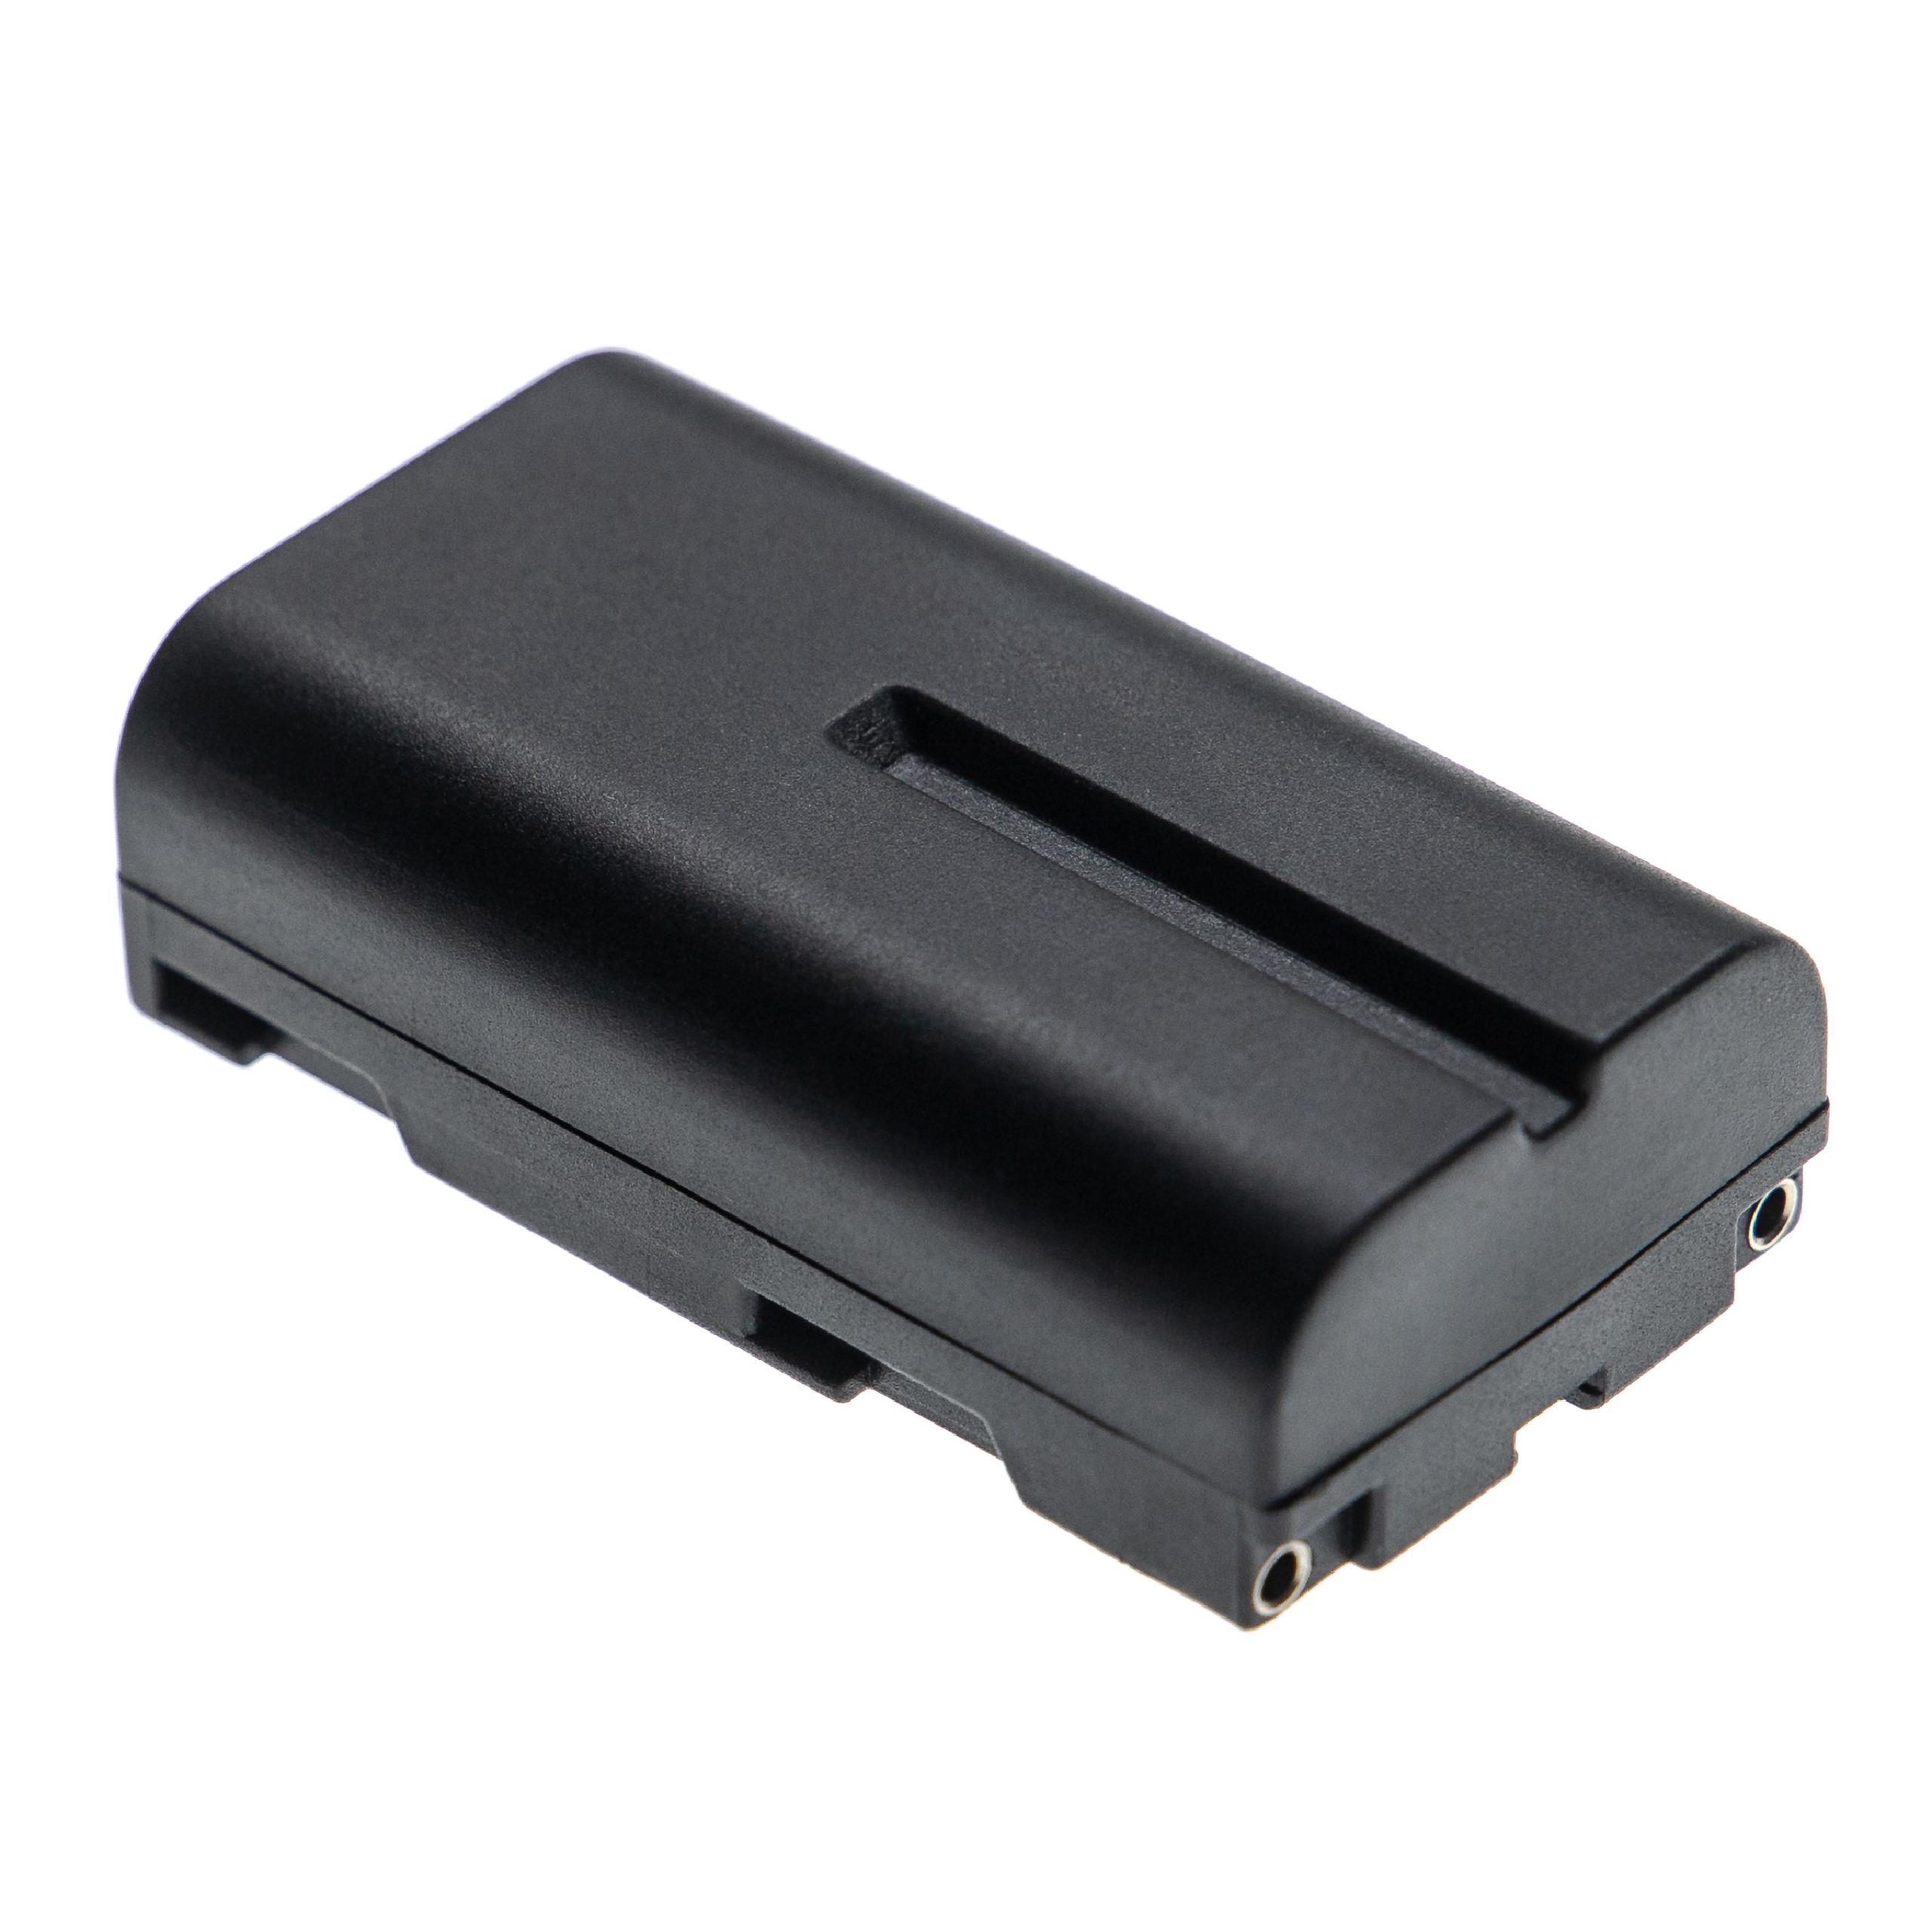 Akumulator do drukarki / drukarki etykiet zamiennik Epson C32C831091, LIP-2500, NP-500 - 3400 mAh 7,4 V Li-Ion